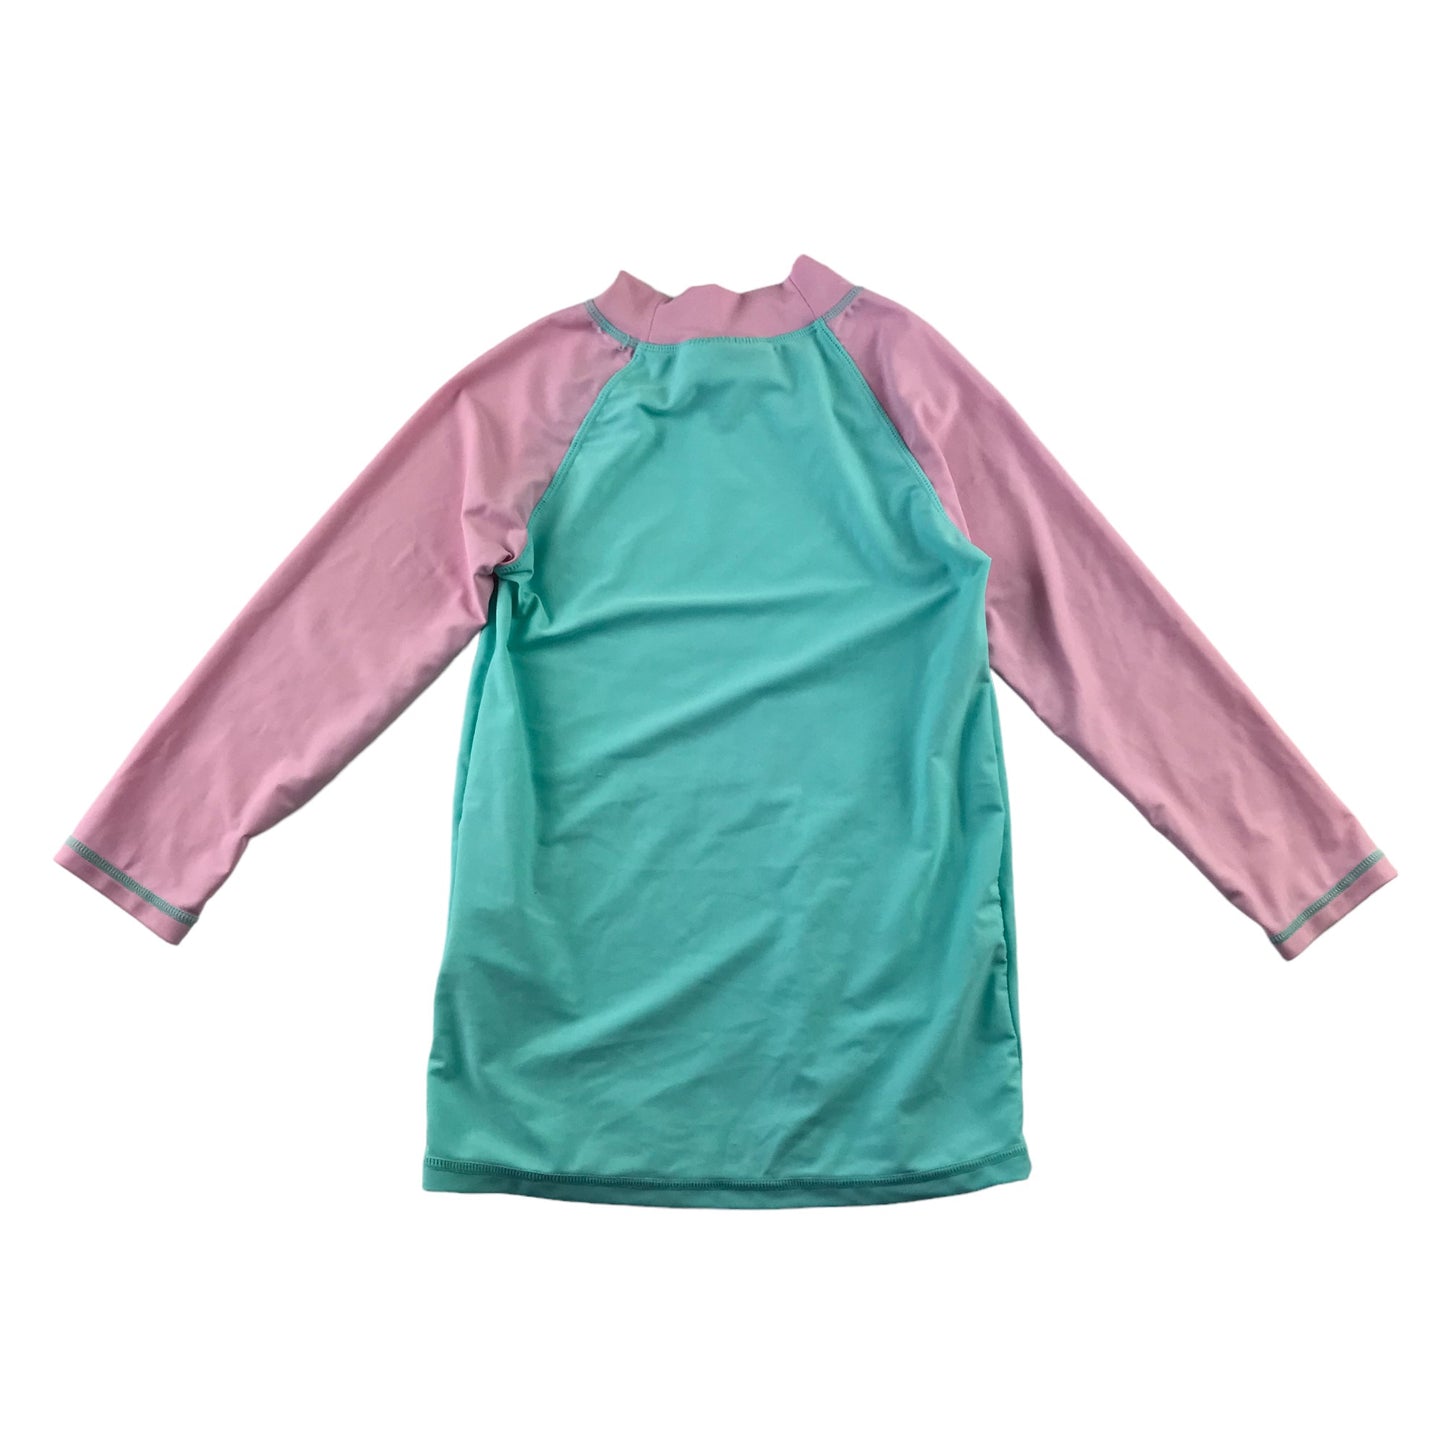 Peppa Pig Swim top Mint and Pink long sleeve Paradise print